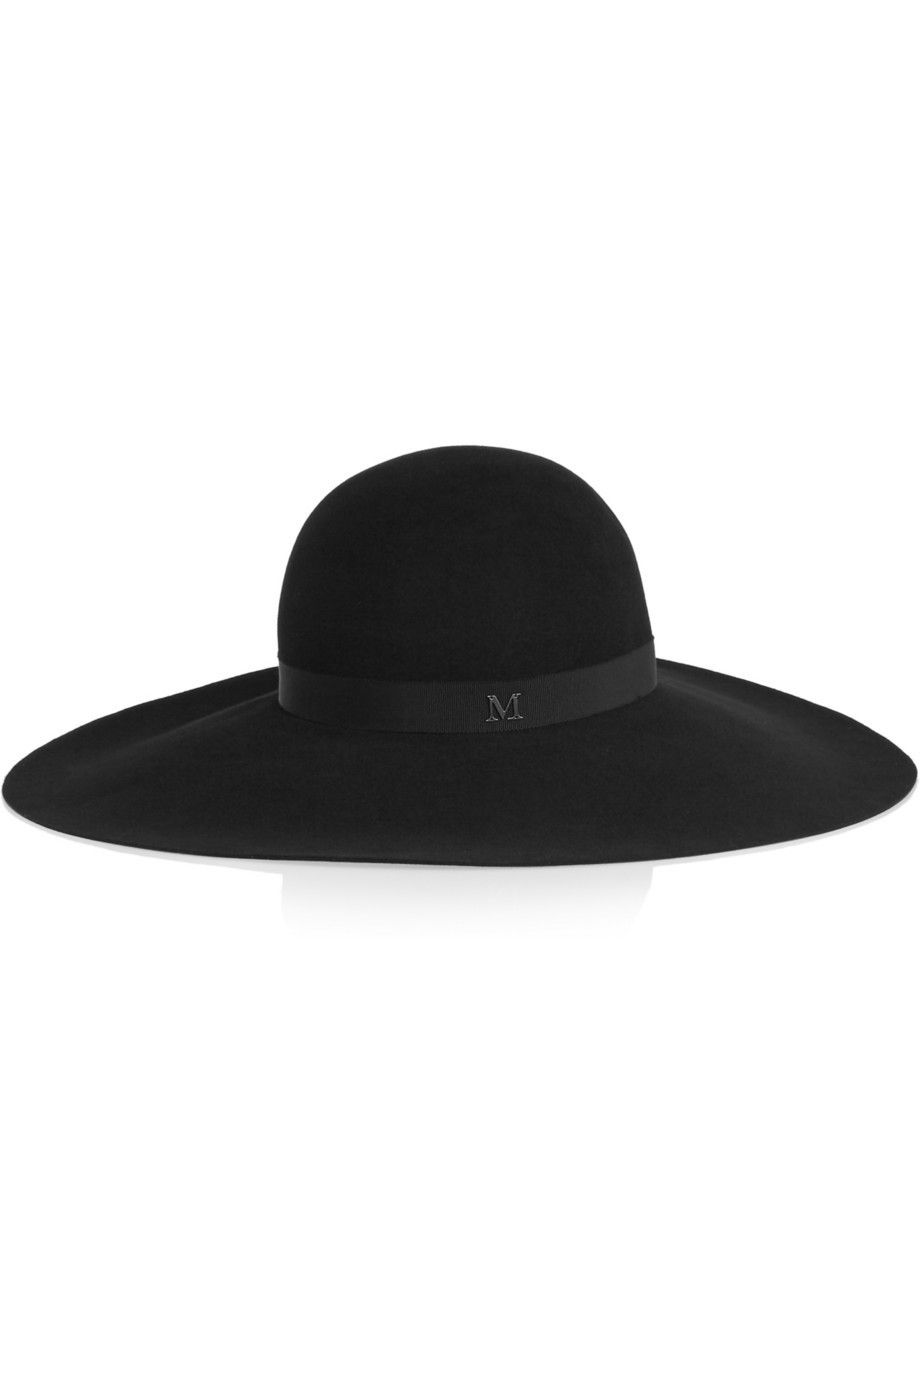 Hat, Headgear, Costume accessory, Costume hat, Fashion accessory, Black, Beige, Costume, Fedora, Sun hat, 